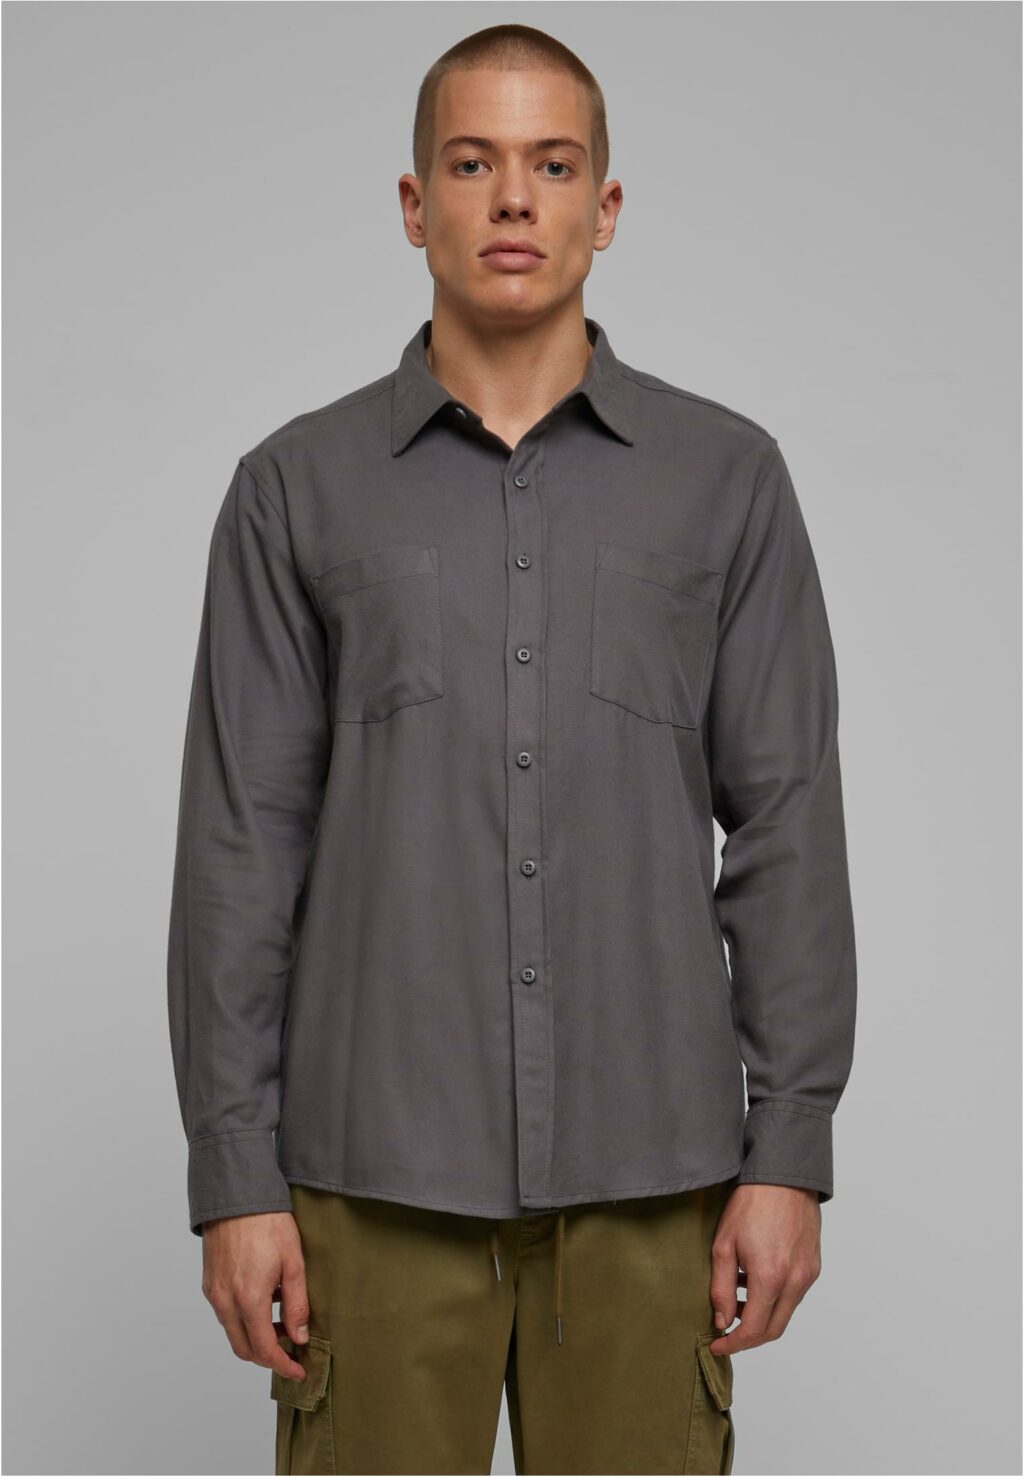 Urban Classics Flanell Shirt darkshadow/darkshadow TB6357